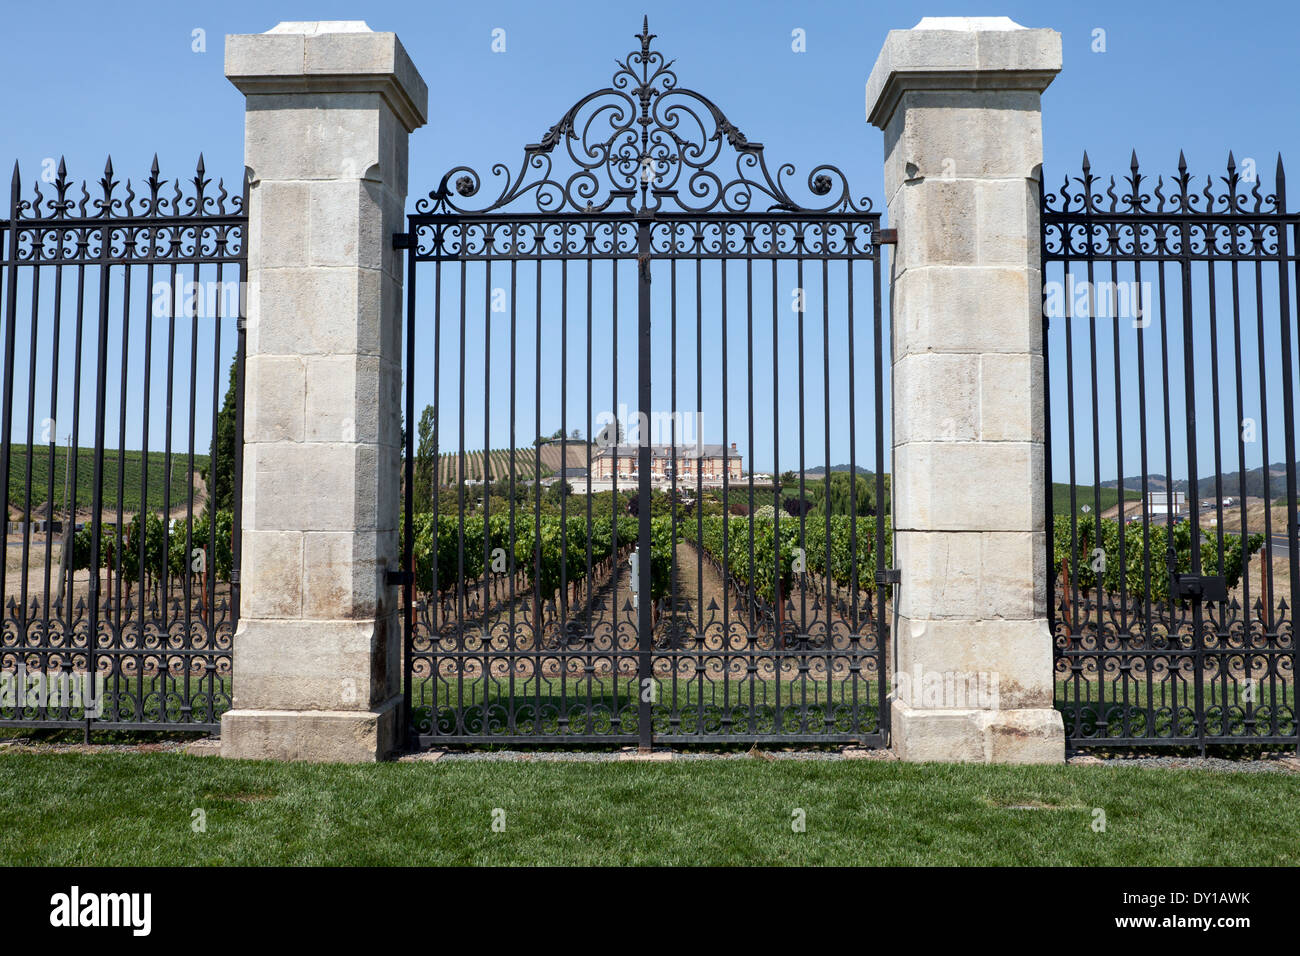 Iron gate of the Domaine Carneros winery, Napa, California, USA Stock Photo